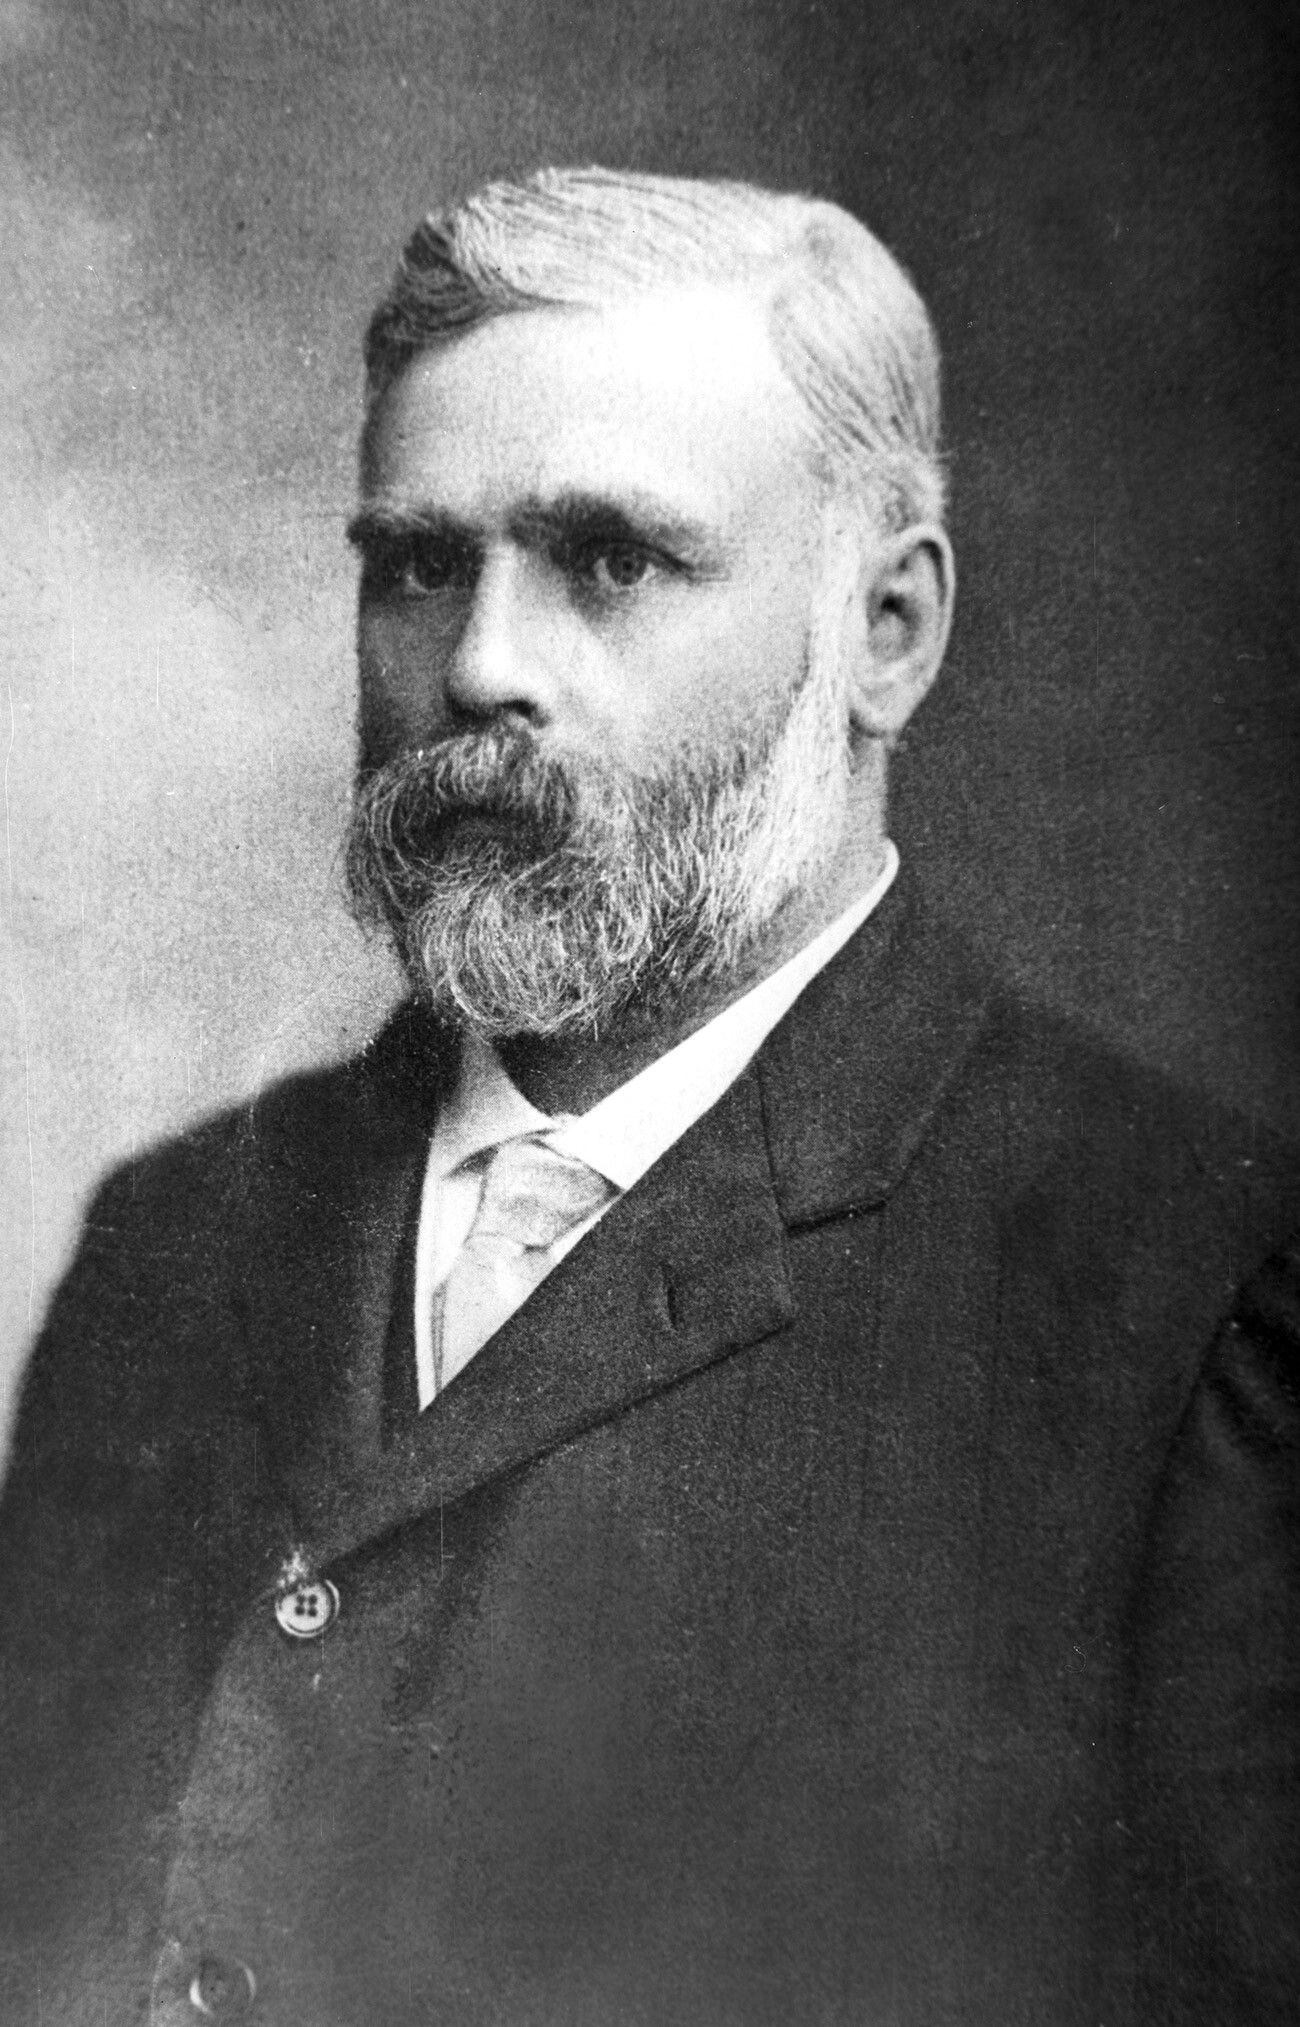 Emanuel Ludvig Nobel, the eldest son of Ludvig Nobel, took over the Nobel family's oil business after his father died in 1888.